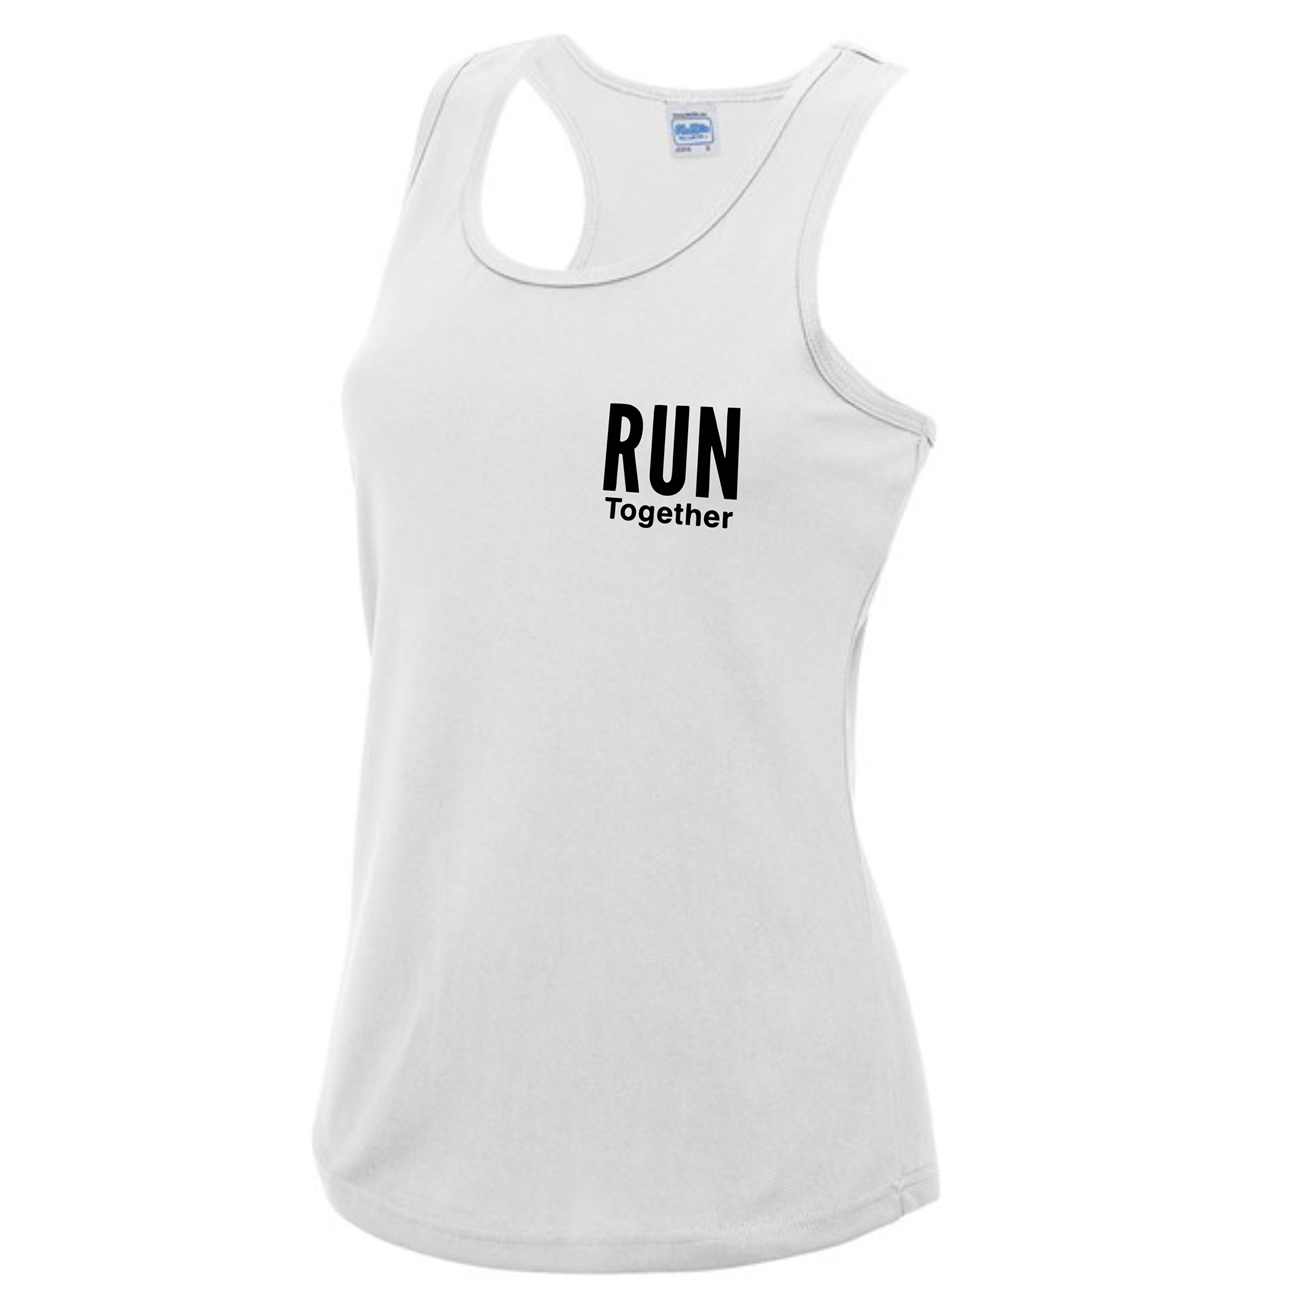 Run Together Women's Vest